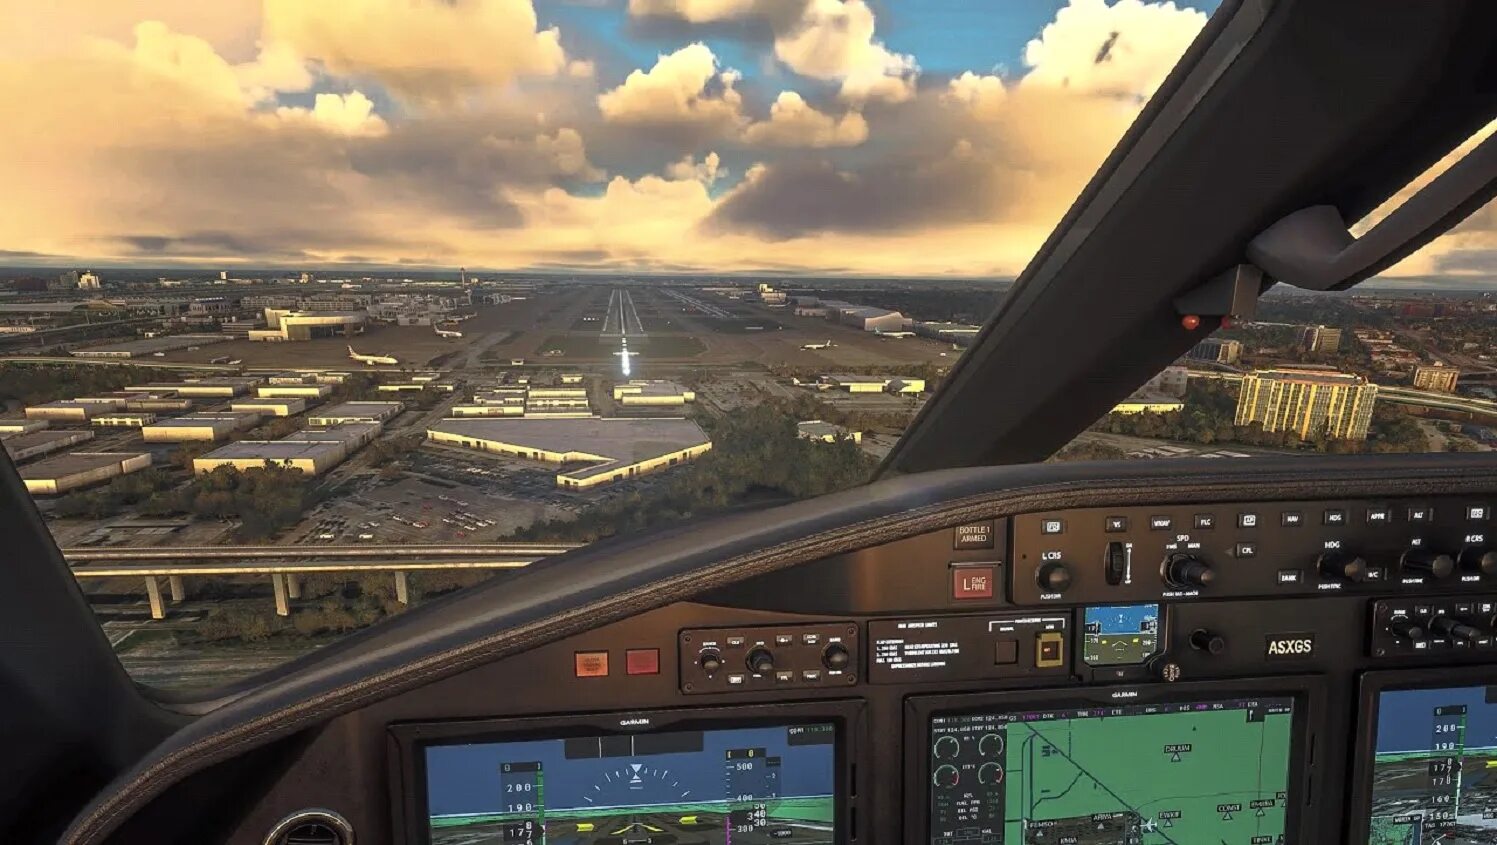 Майкрософт симулятор 2020 купить. Майкрософт Флайт симулятор 2020. MFS 2020 кокпит. Microsoft Flight Simulator x 2020. Microsoft Flight Simulator 2020 Оренбург.